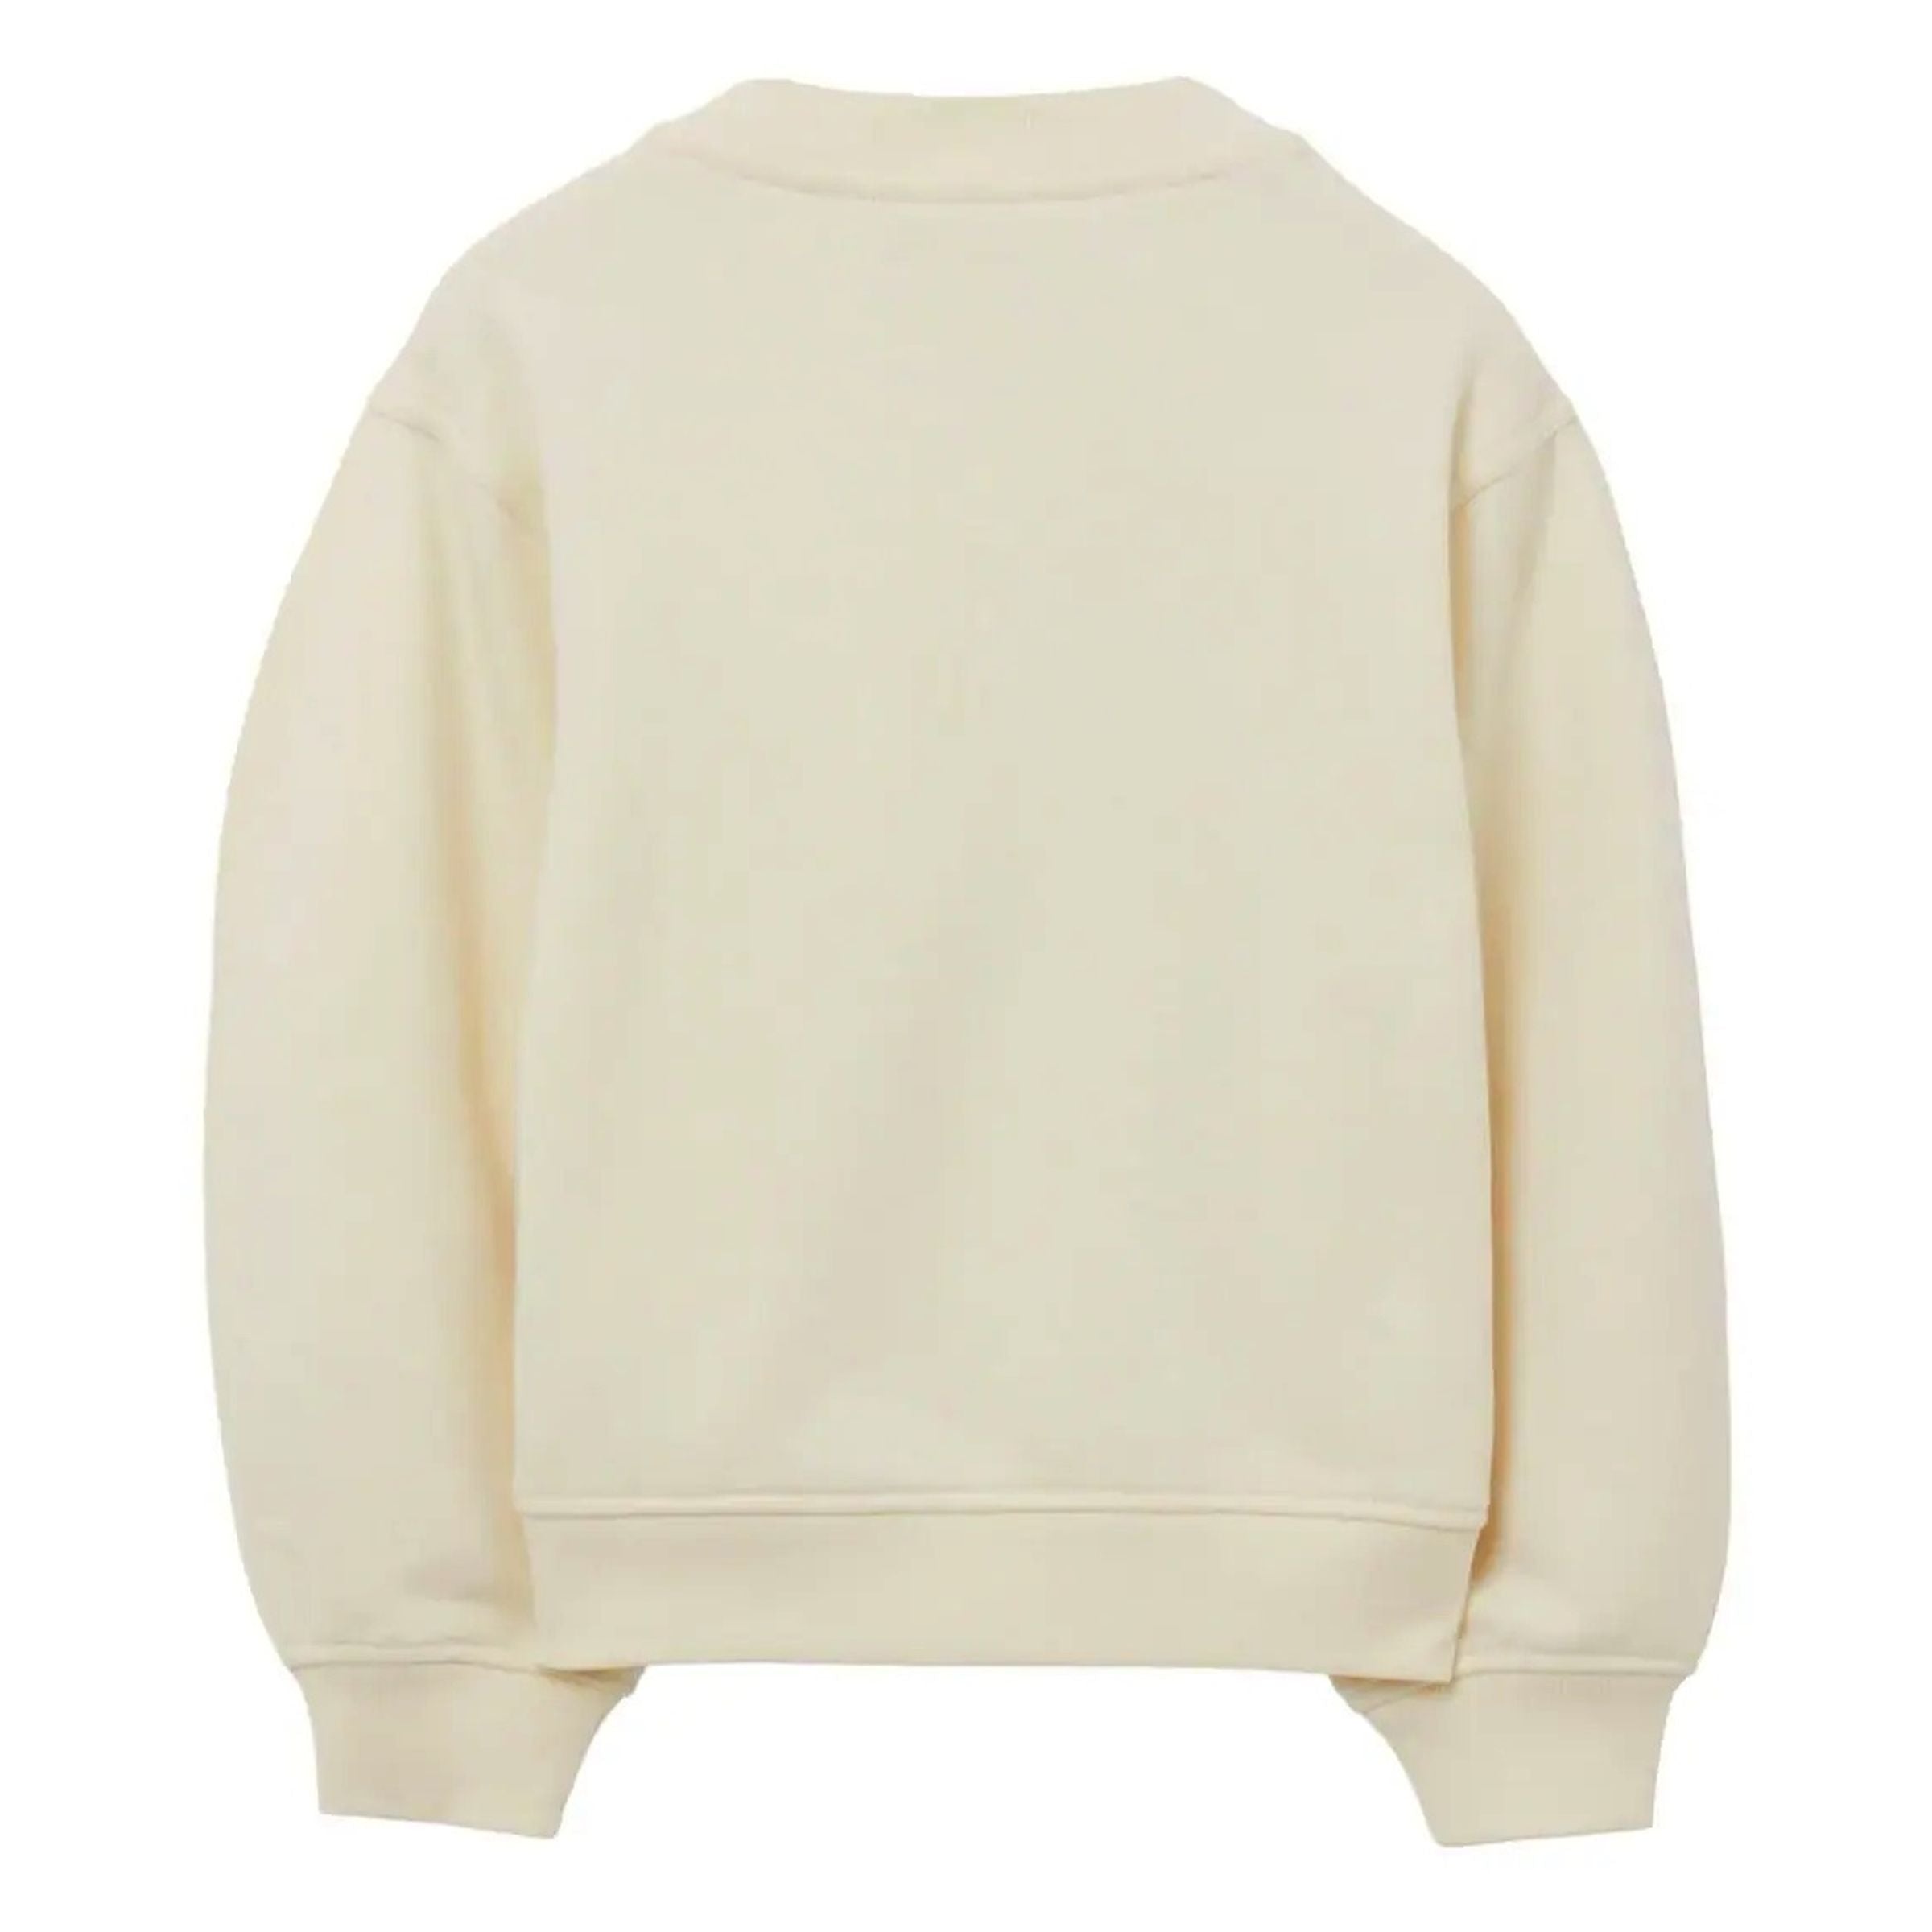 Burberry cotton sweatshirt